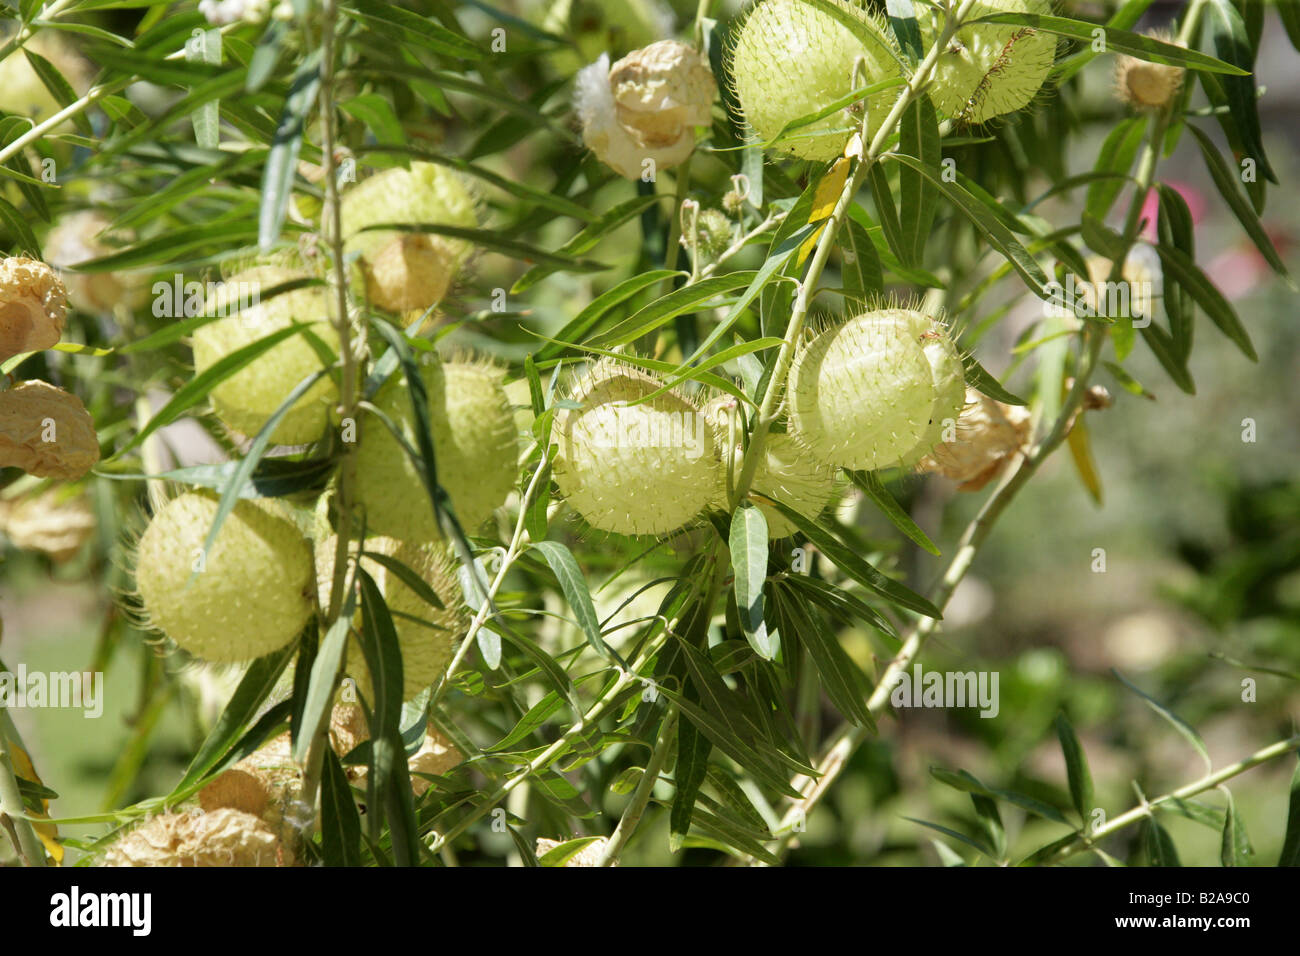 Ballon Baumwolle Bush Frucht, Asclepias Physocarpa aka Gomphocarpus Physocarpus Lobelia, Tule, Bundesstaat Oaxaca, Mexico Stockfoto